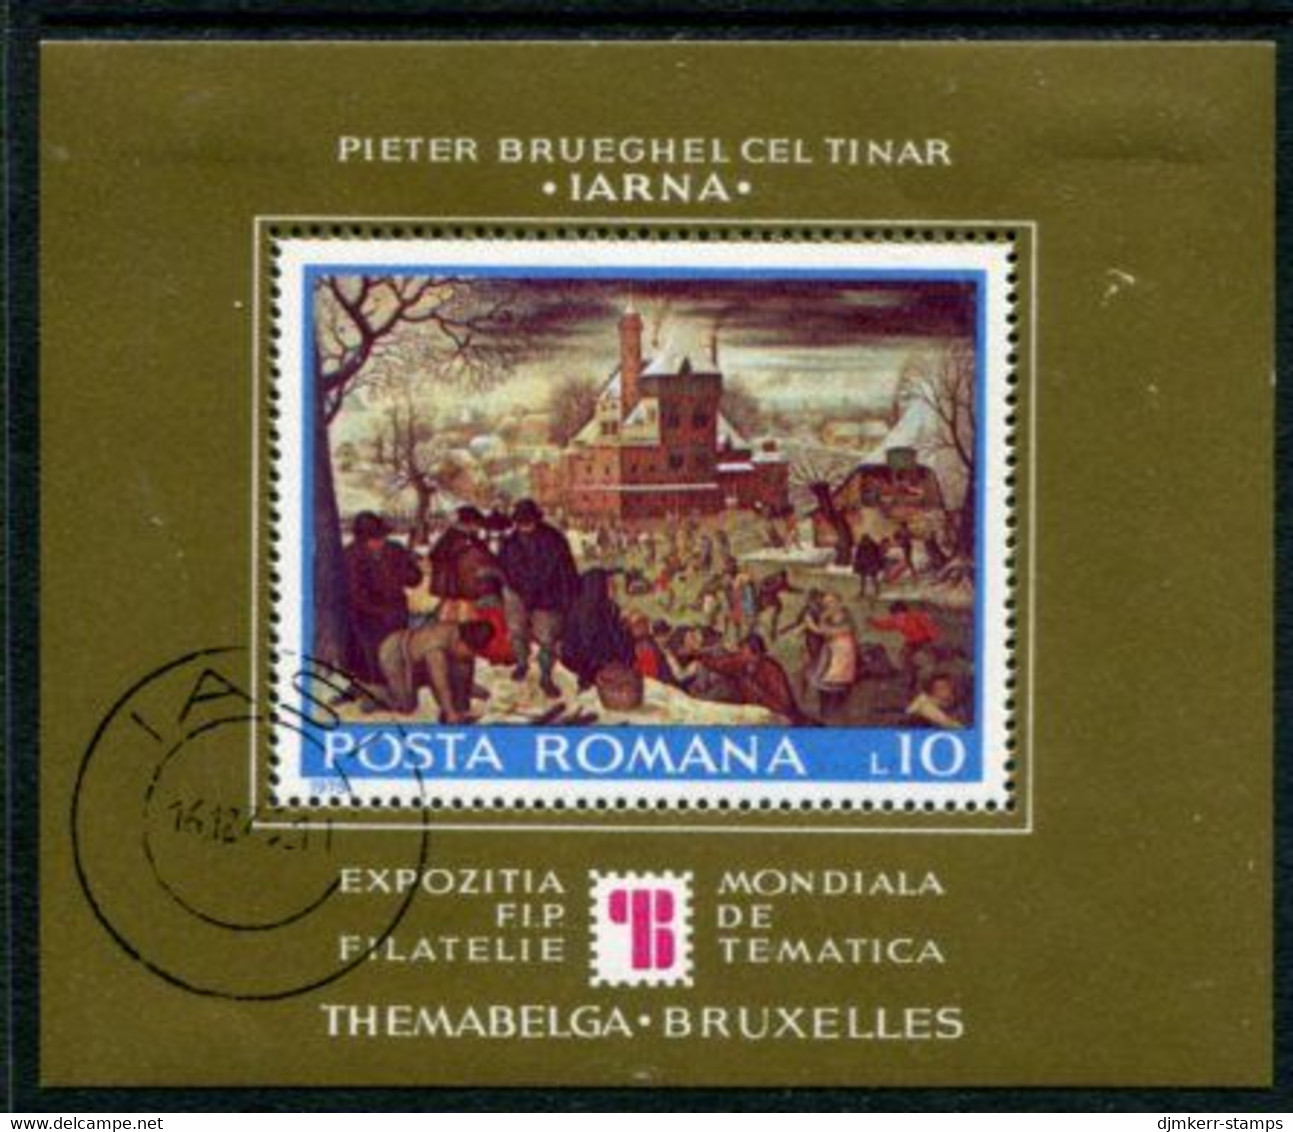 ROMANIA 1975 THEMABELGA Stamp Exhibition Block Used.  Michel Block 127 - Blocs-feuillets